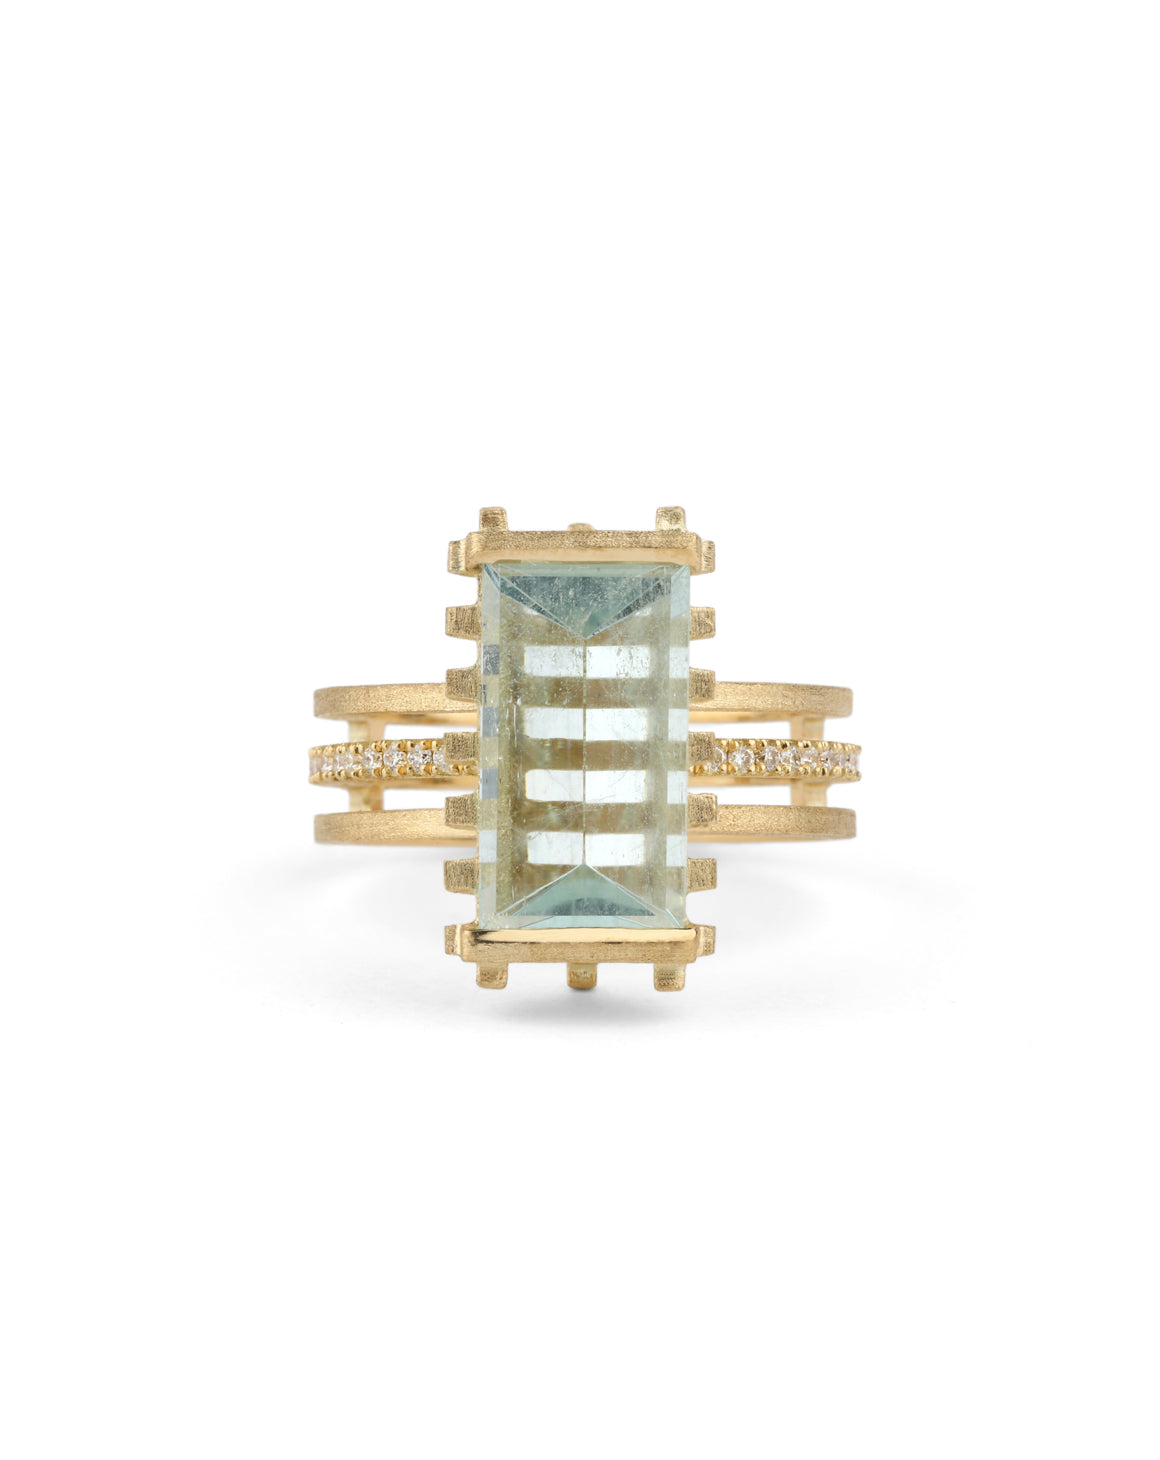 Seven Strut Parallel Prism Ring - aquamarine